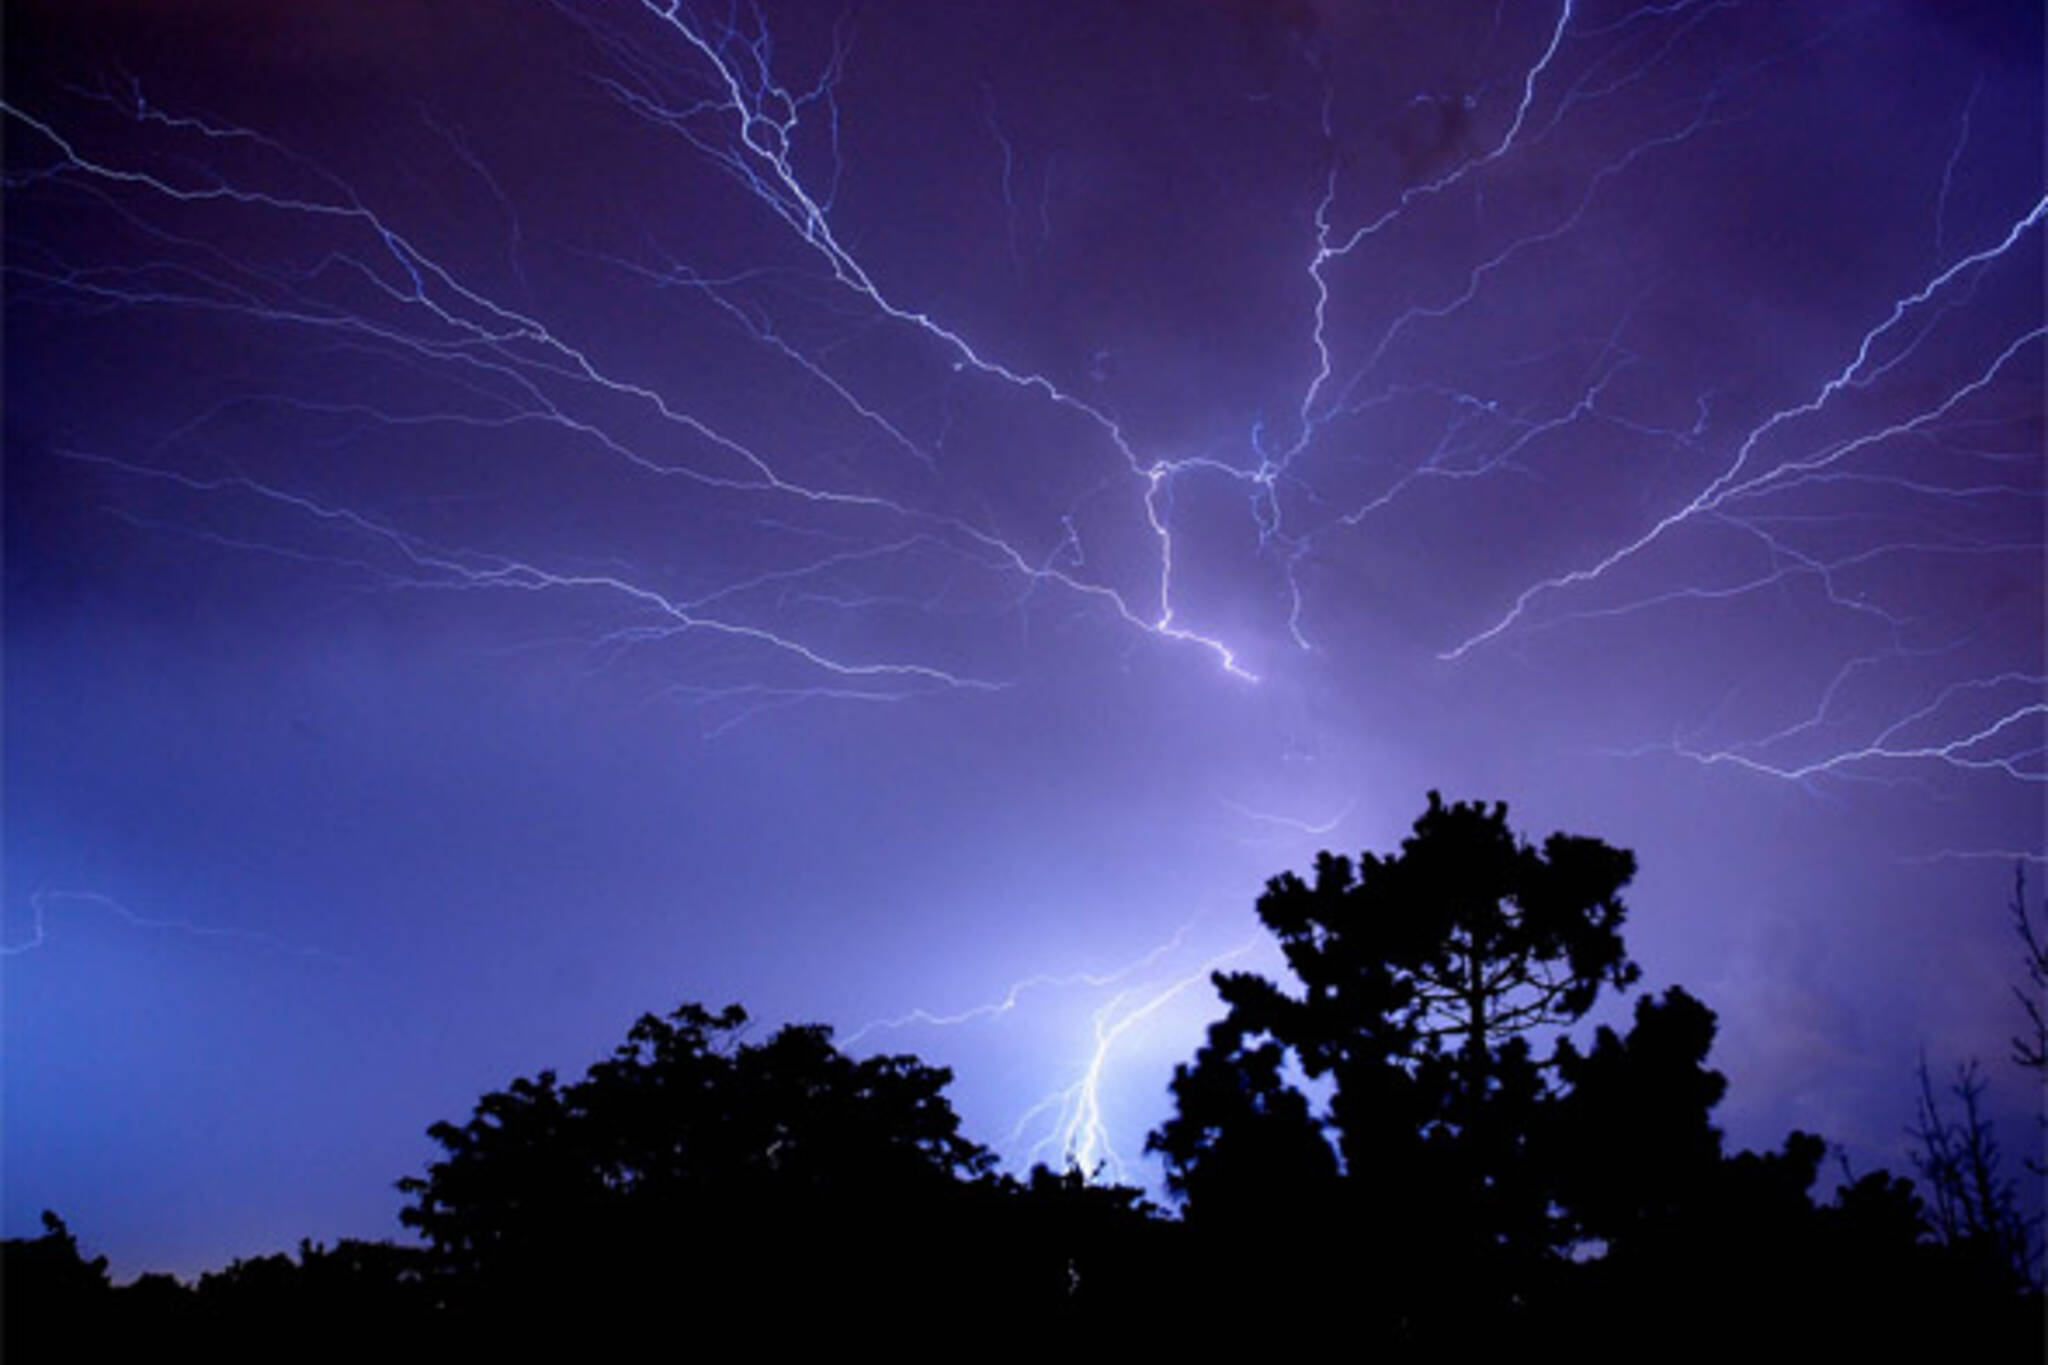 toronto lightning storm august 9th